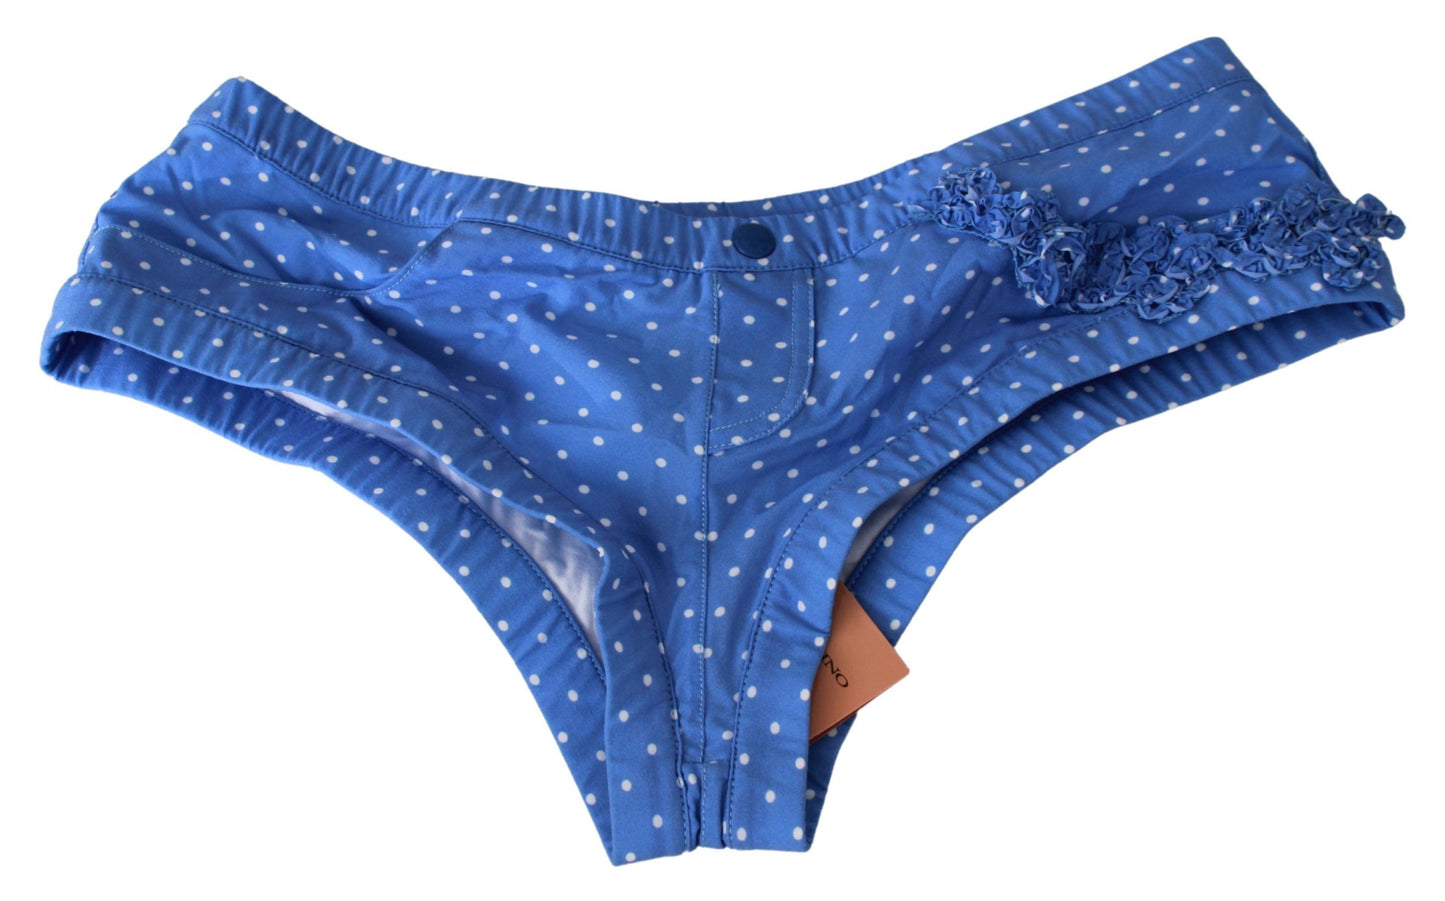 Ermanno Scevino Blue Shorts Beachwear Bikini Bottoms Swimsuit